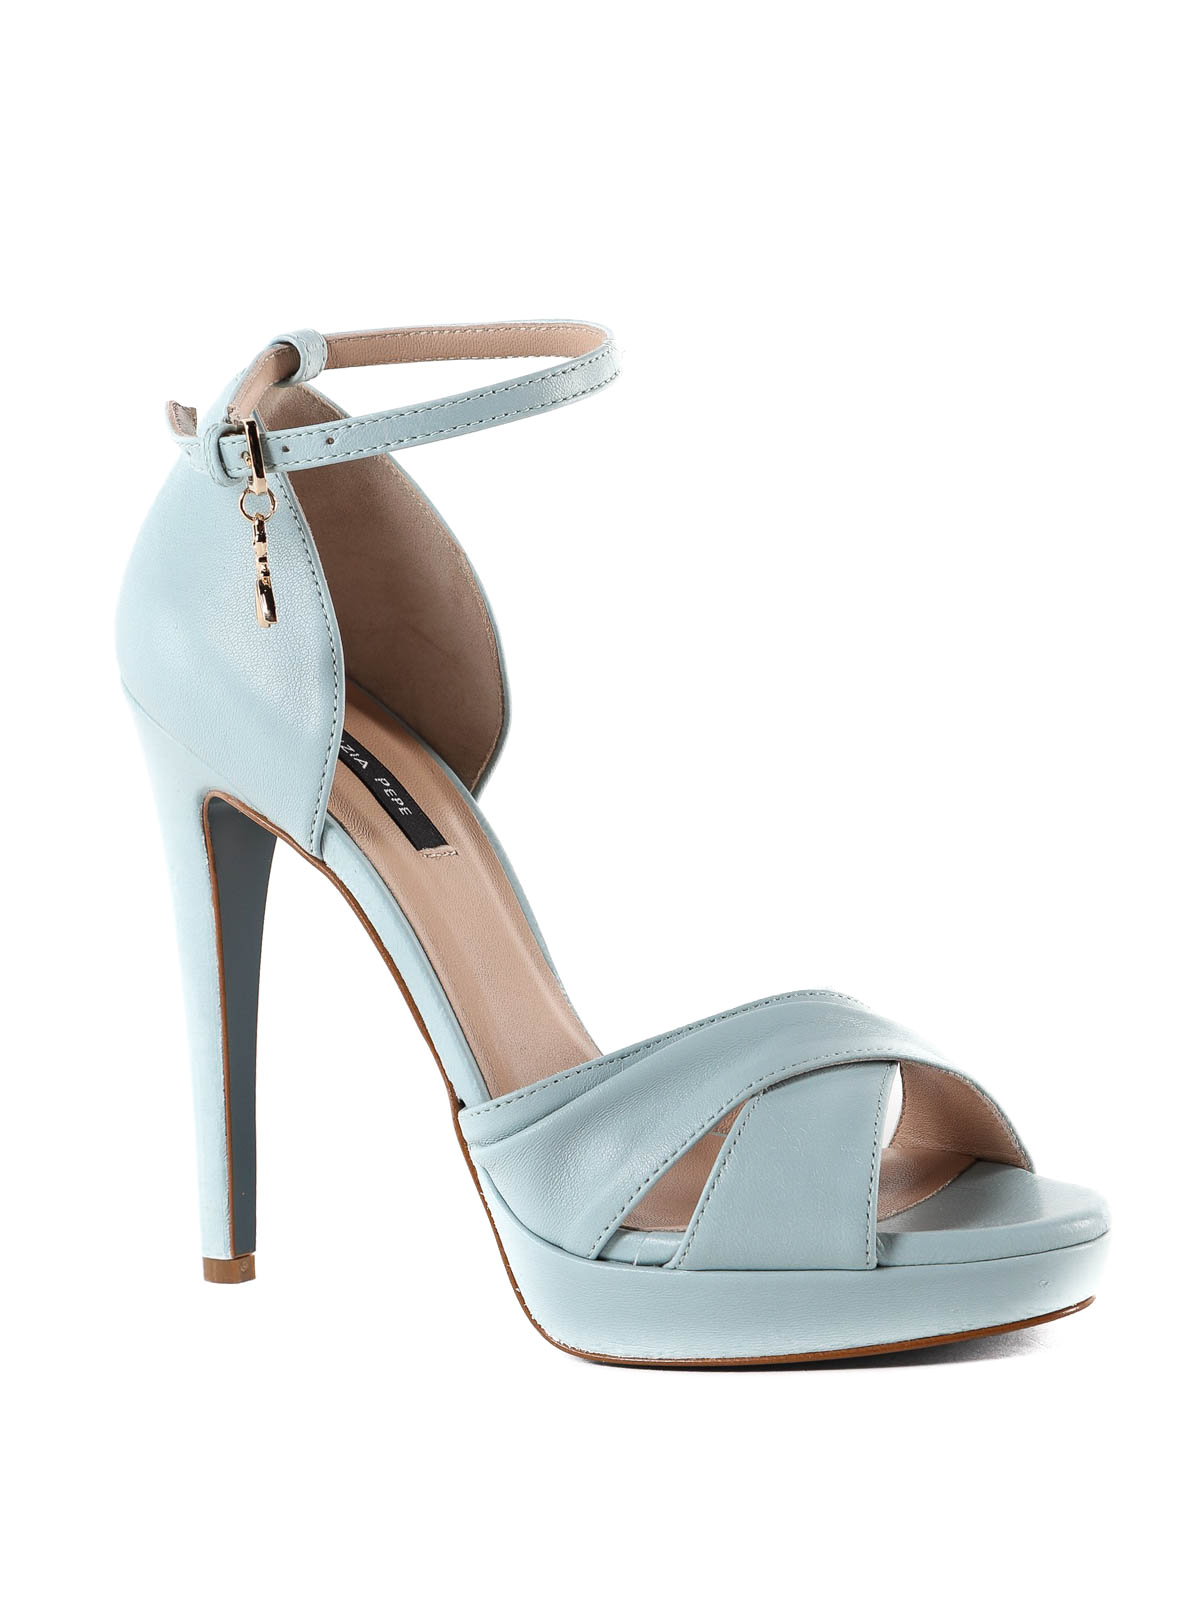 Sandals Patrizia Pepe - Light blue leather high sandals - 2V8486A3KWC743